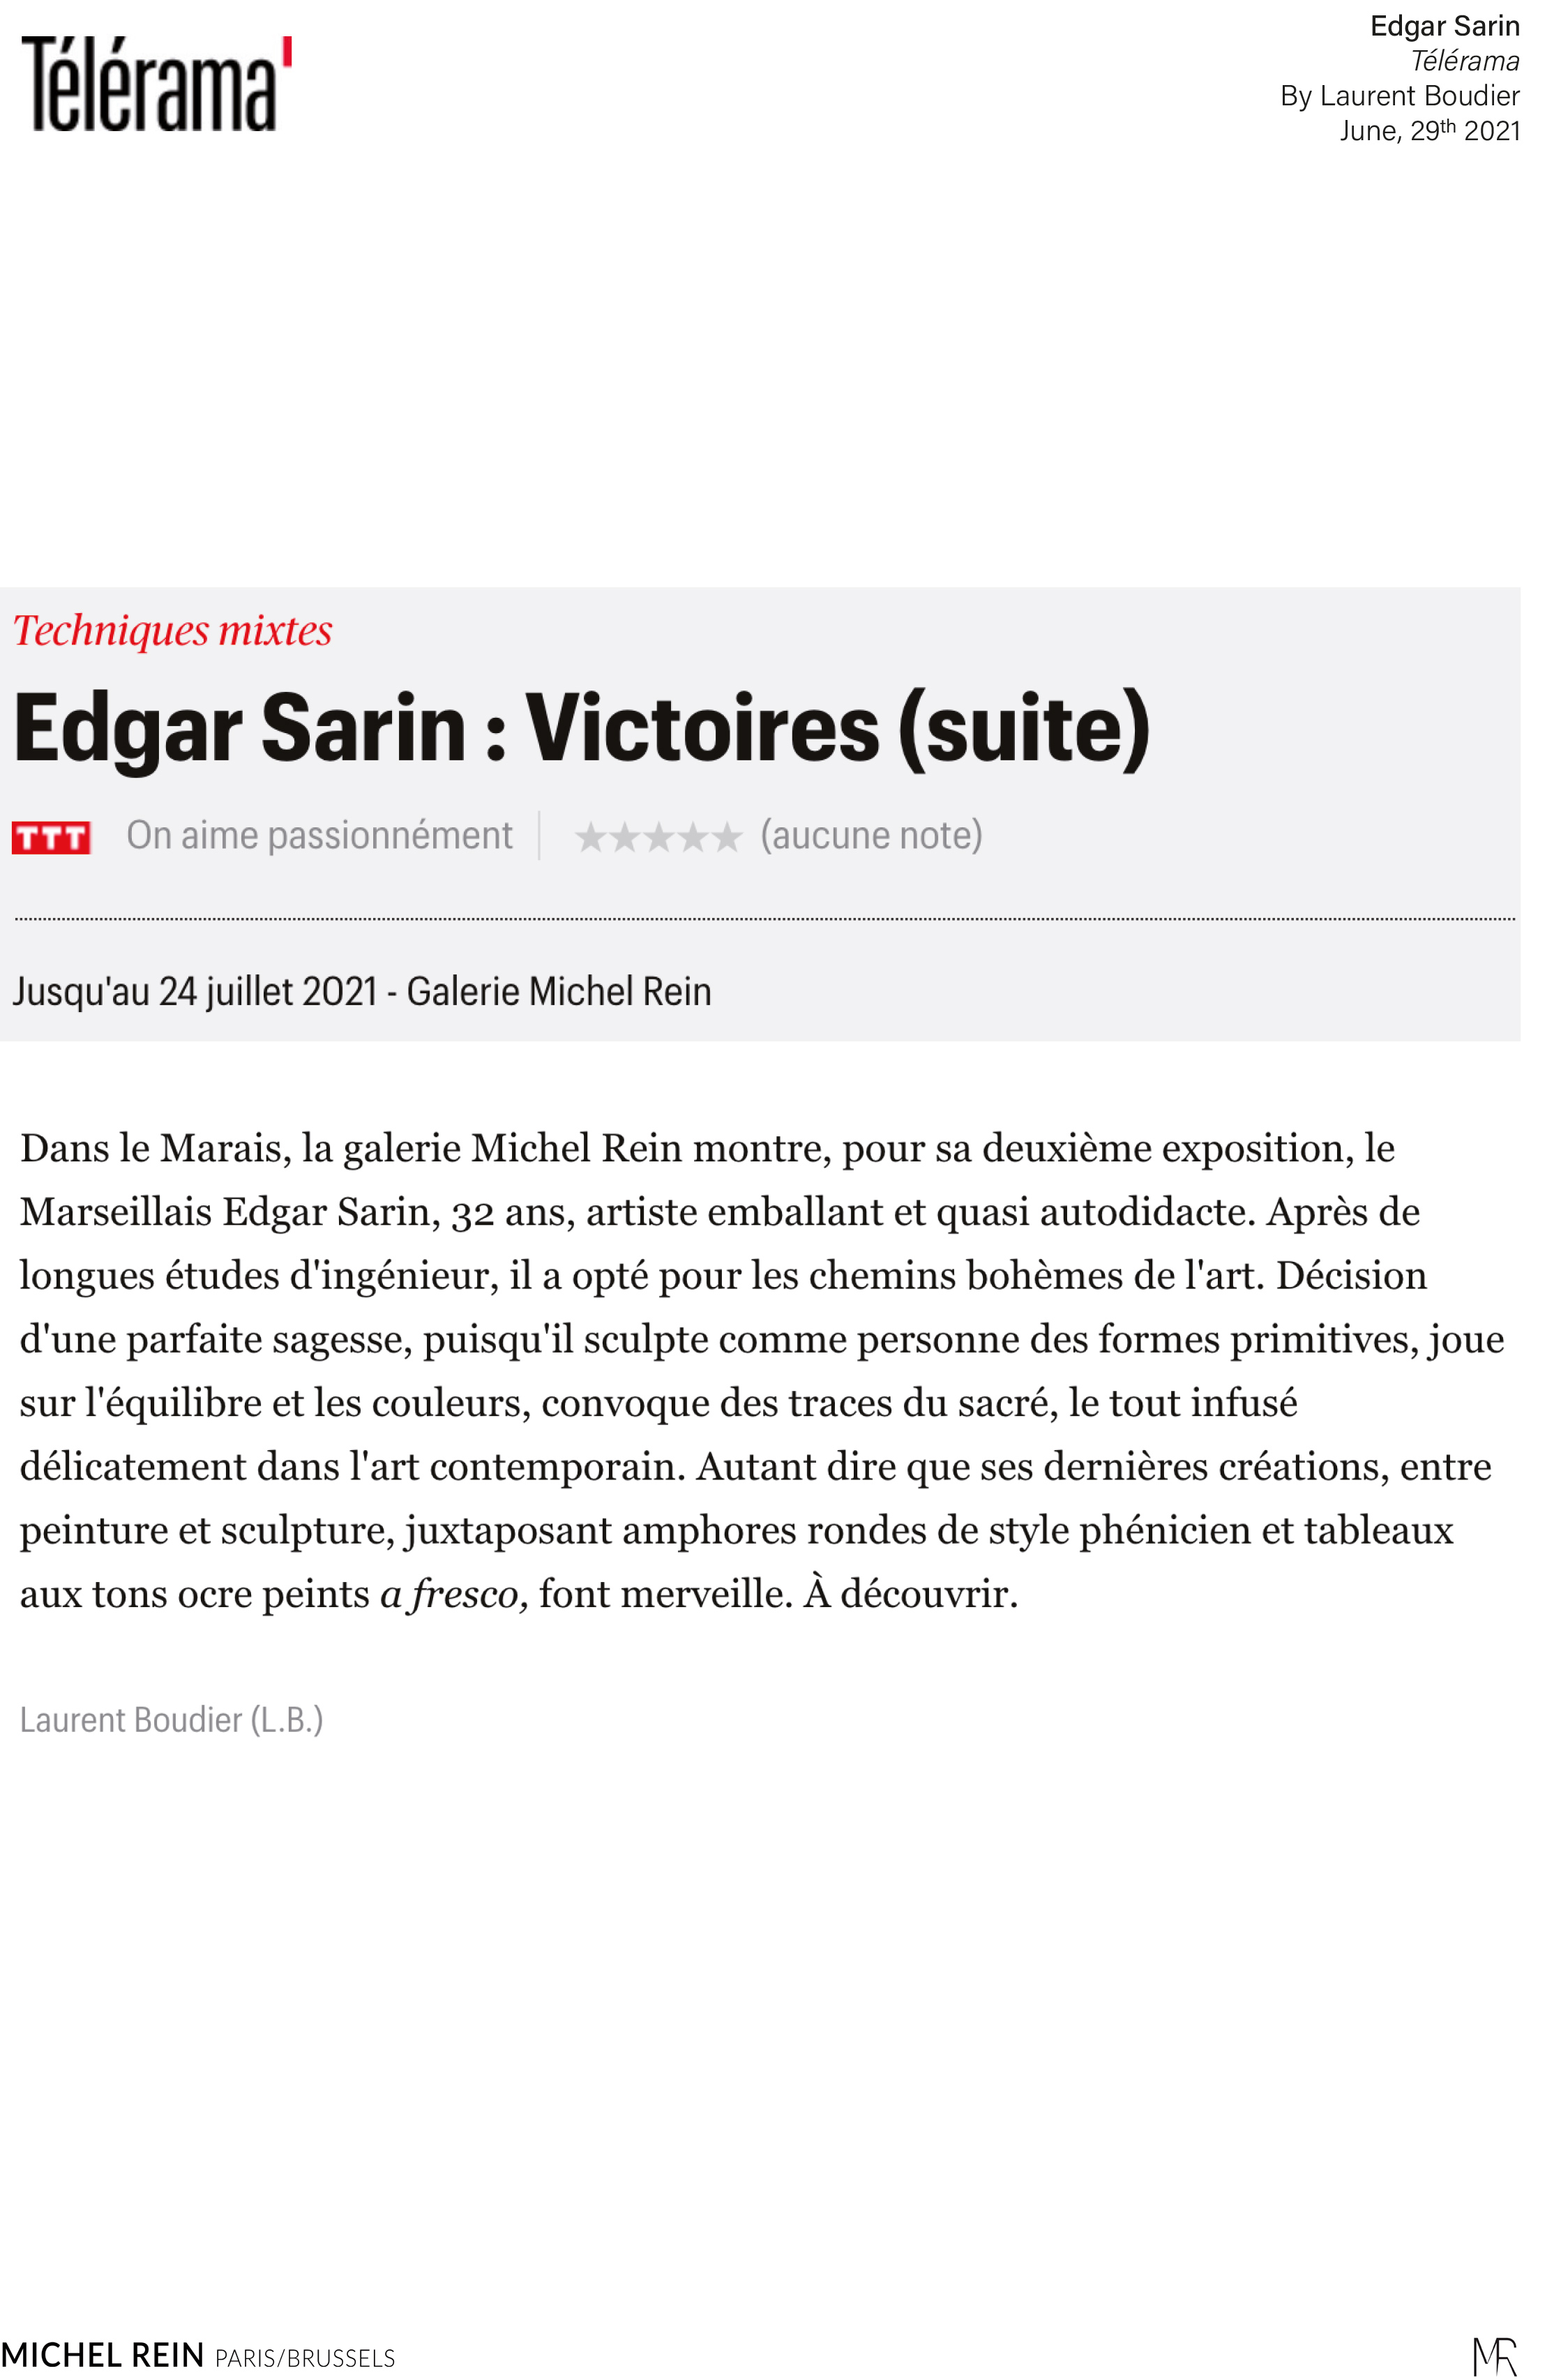 Edgar Sarin : Victoires (suite) - Télérama